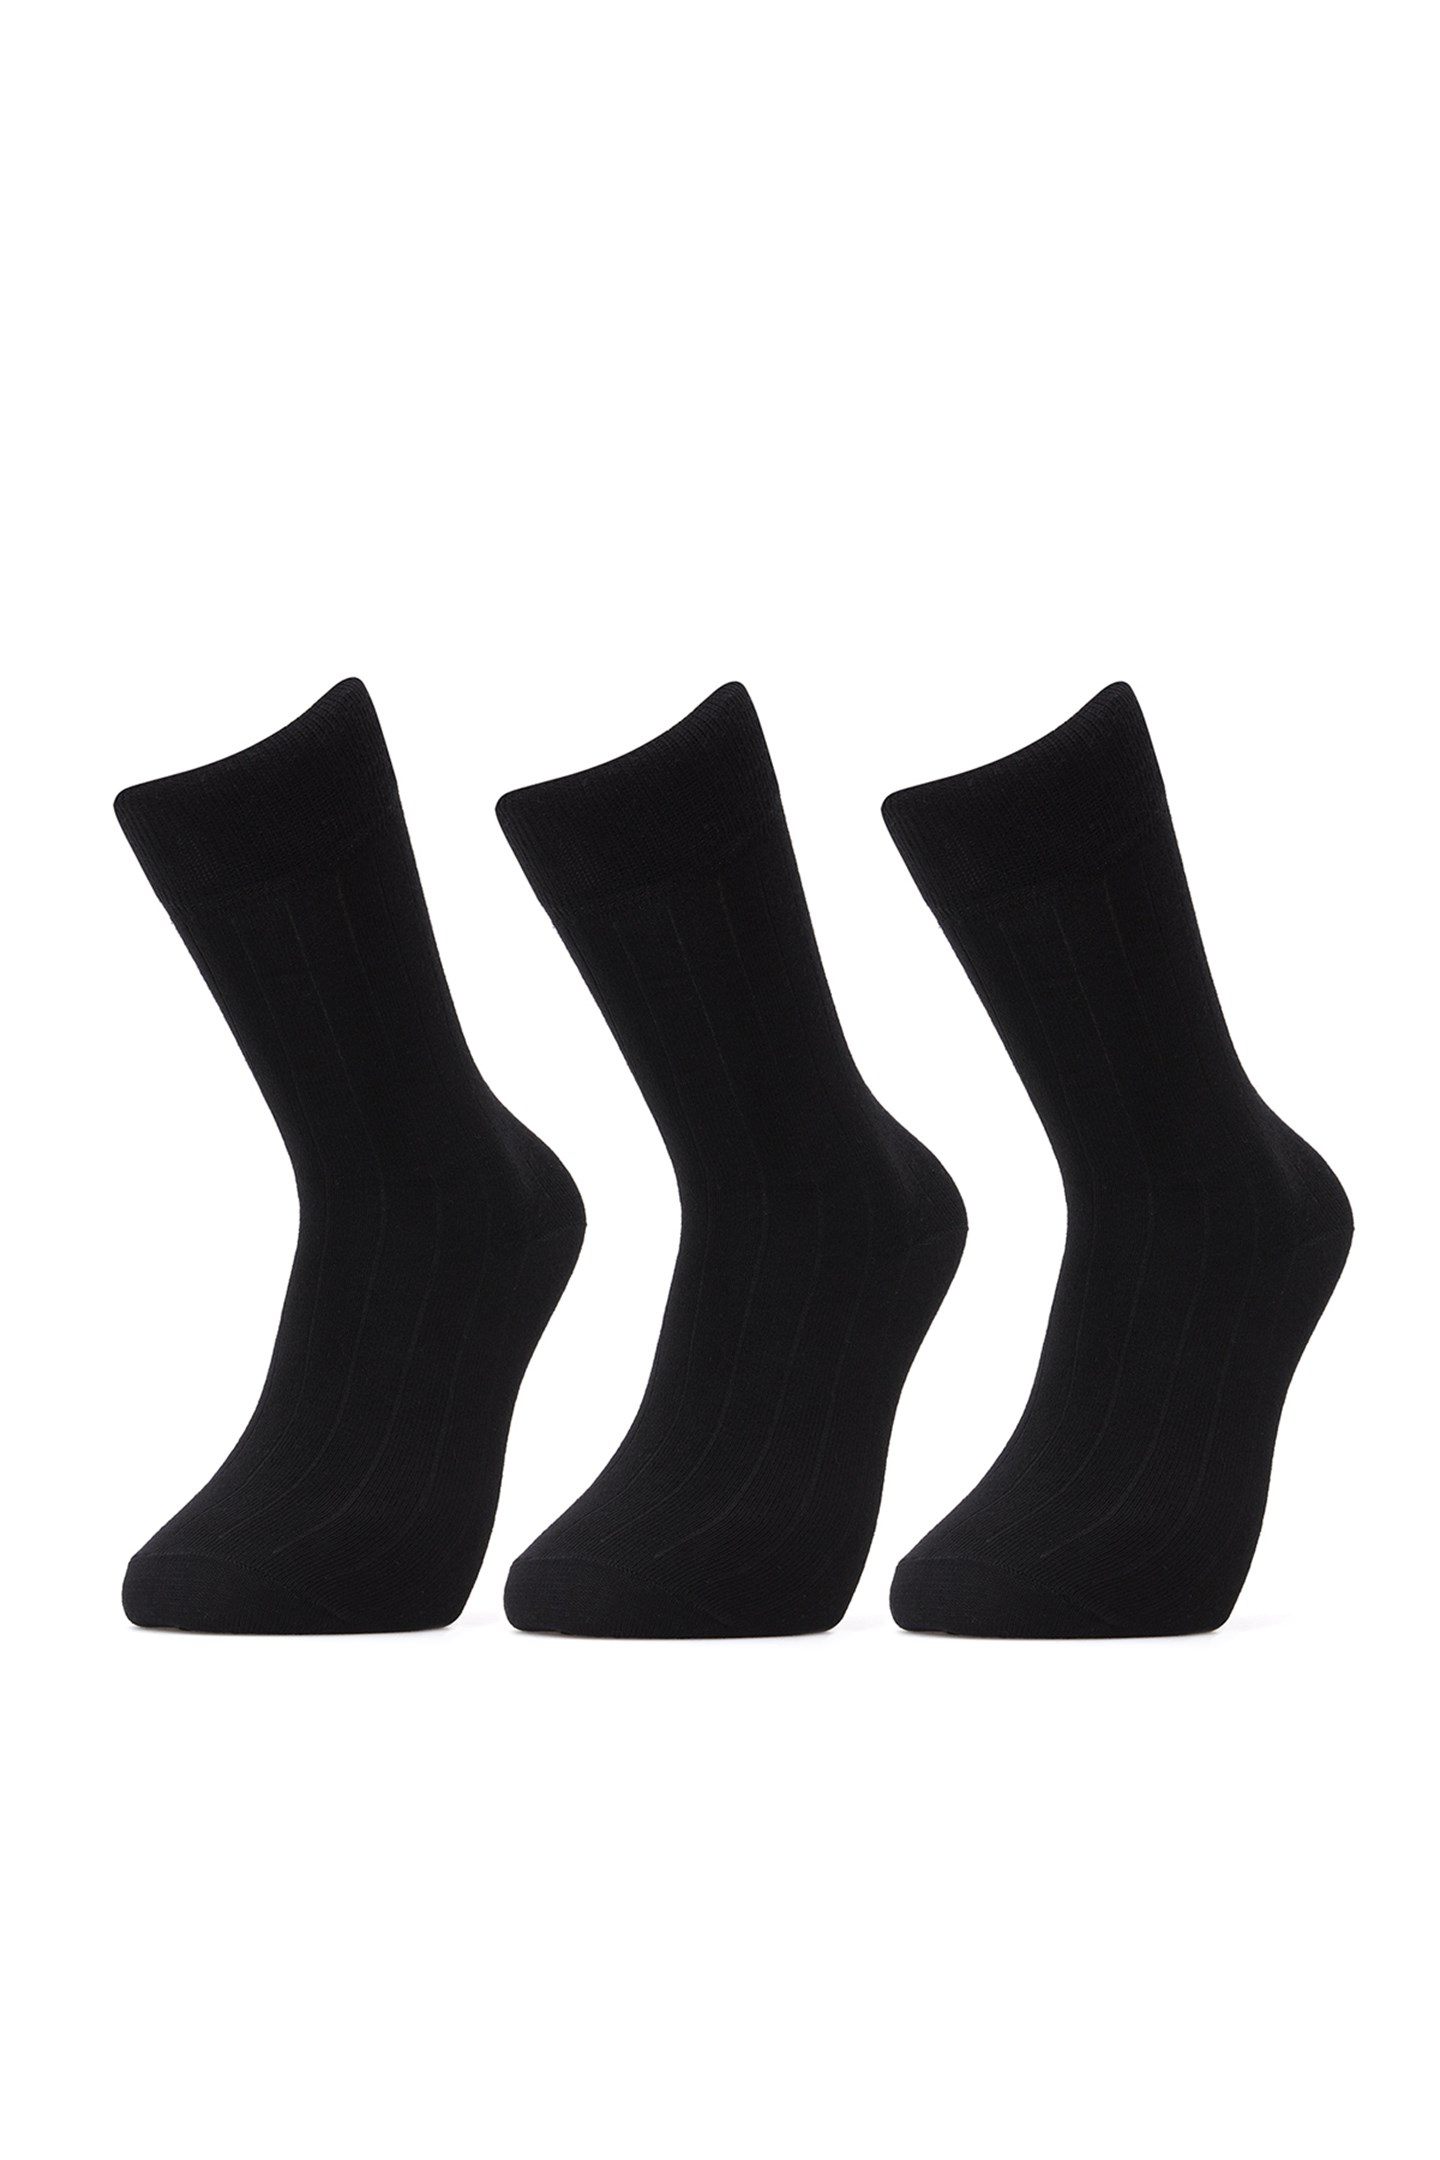 Lee Cooper Noah Erkek 3'Lü Soket Çorap Siyah. 1